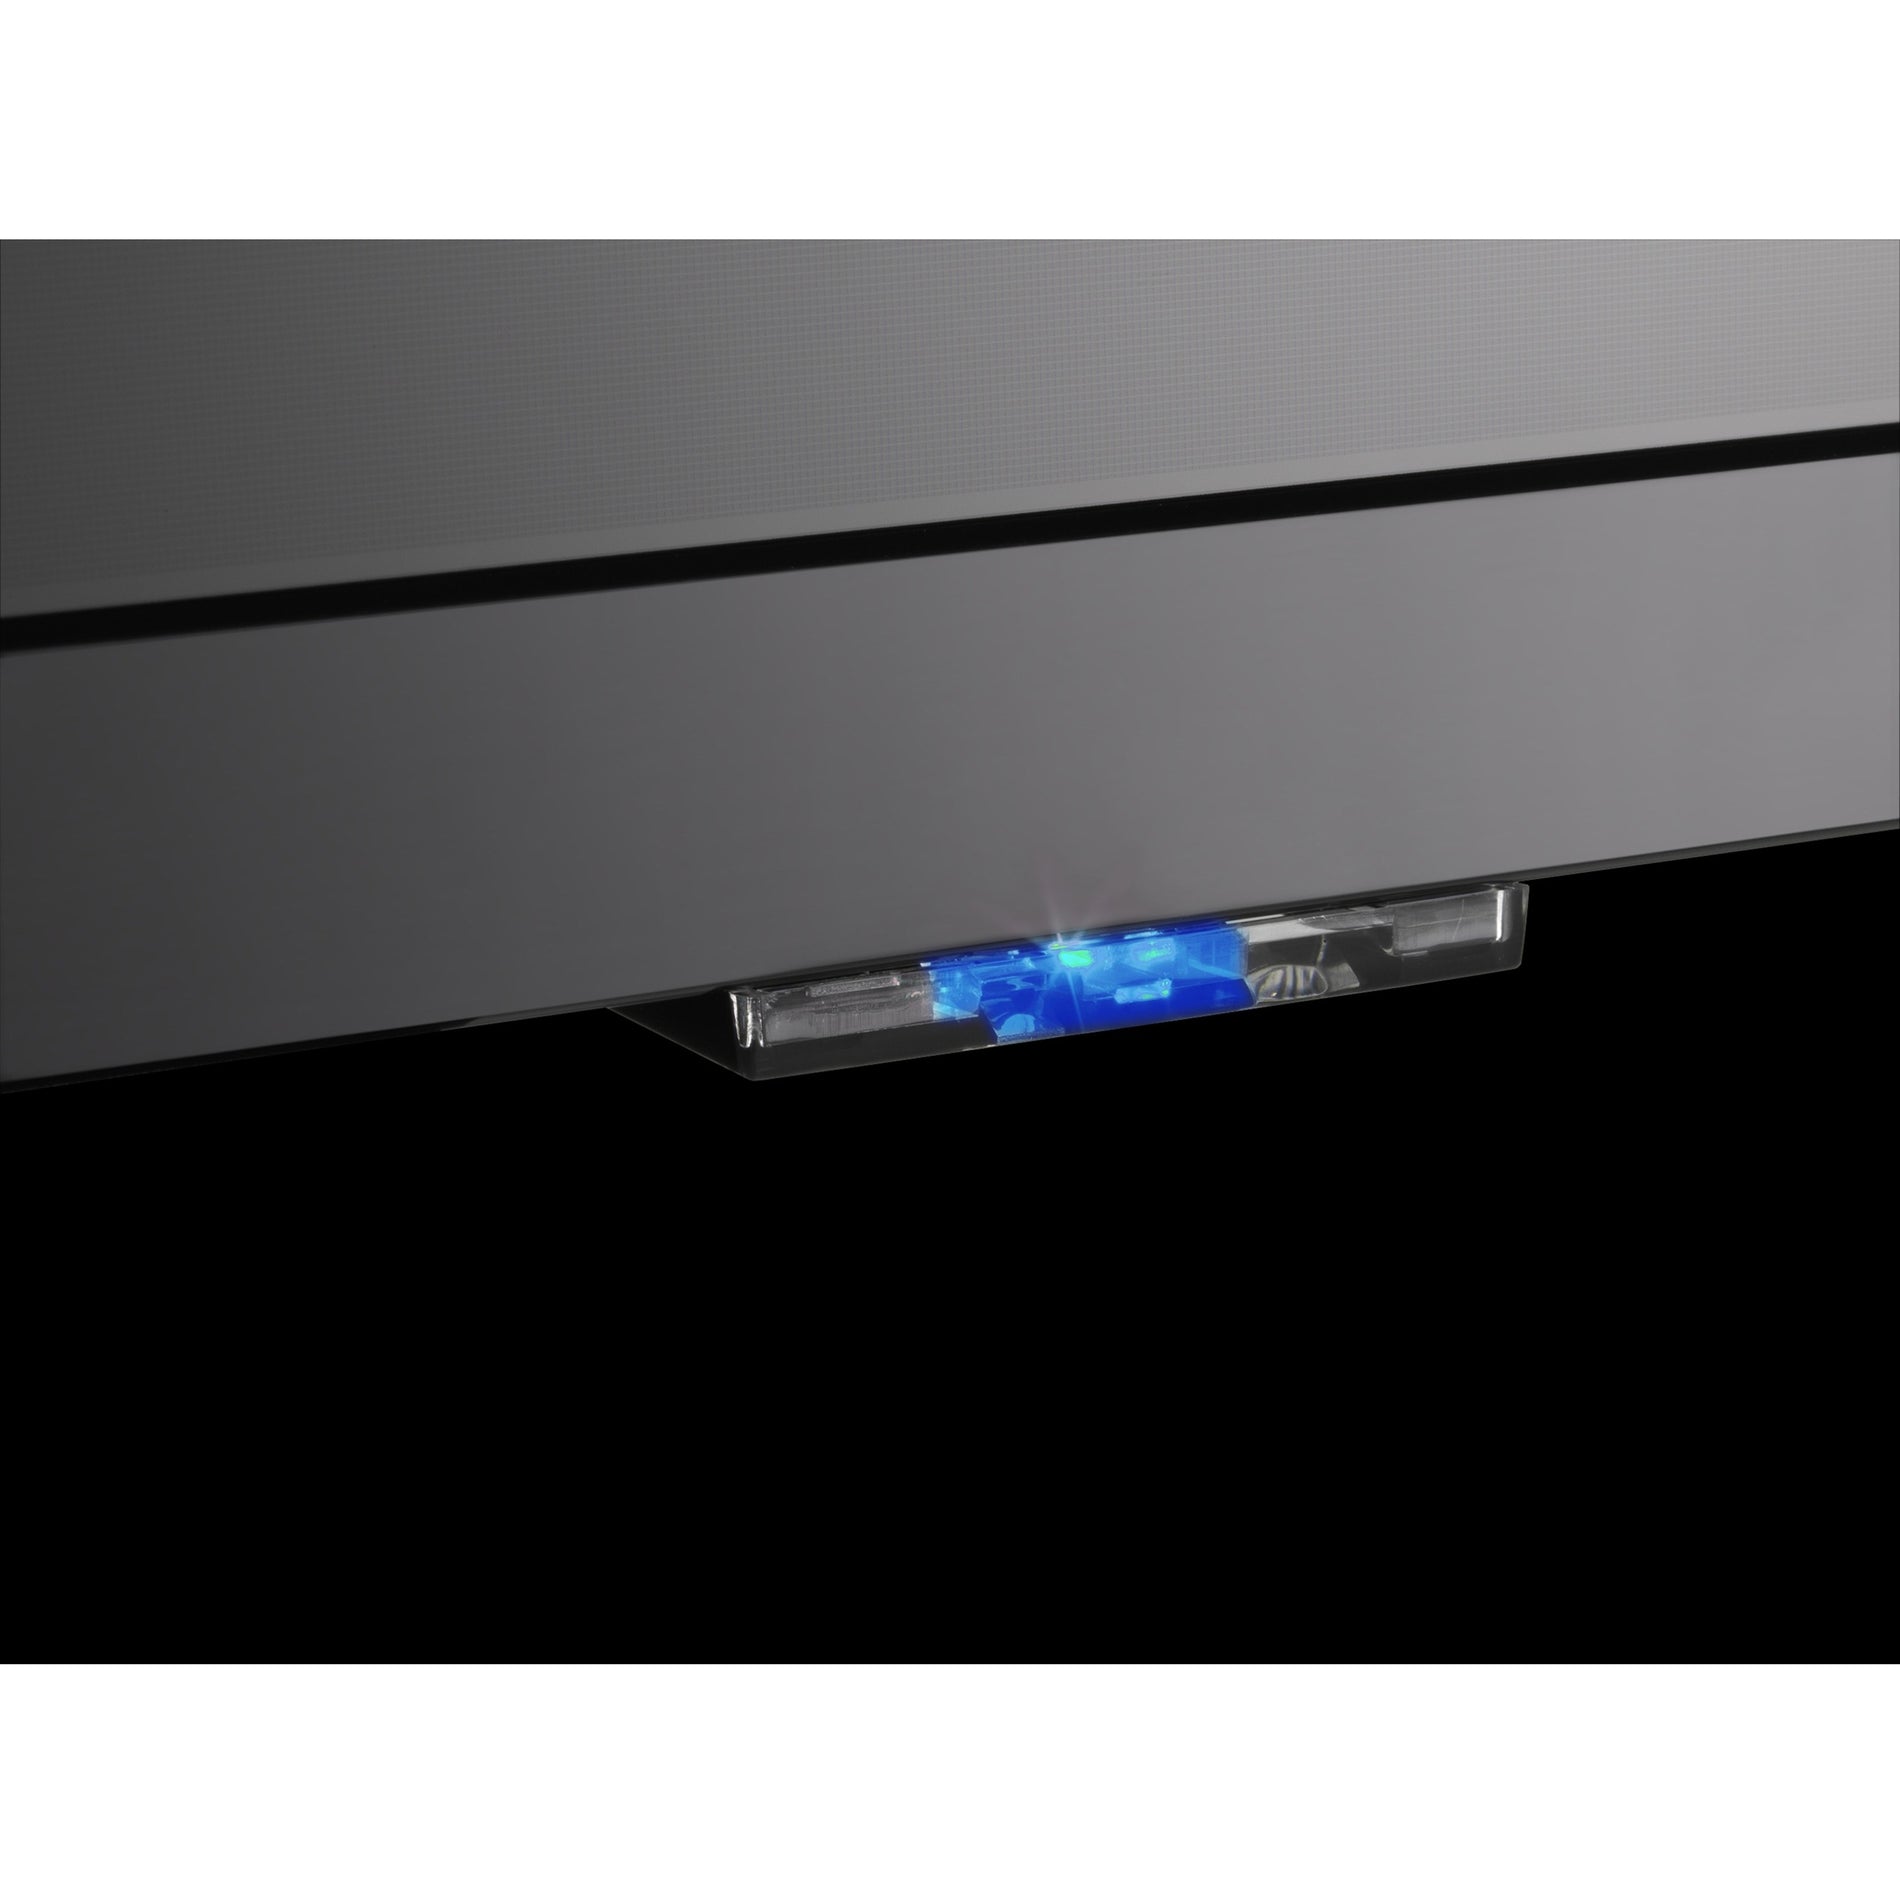 NEC Display E558 55" 4K UHD Display with Integrated ATSC/NTSC Tuner, High Dynamic Range (HDR), Energy Star